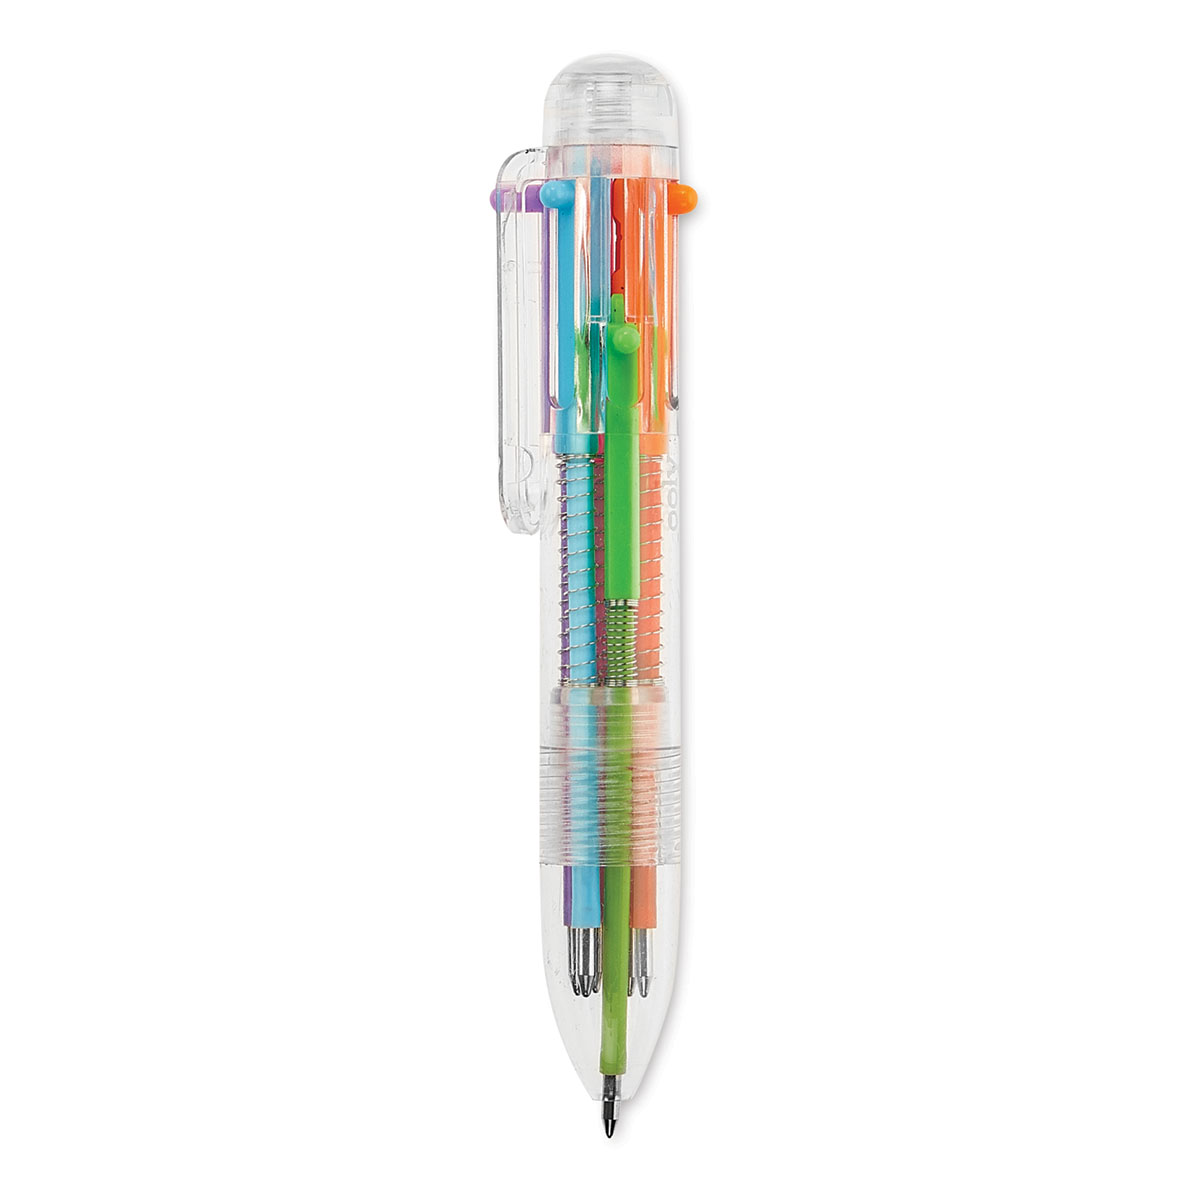 MOHAMM 1 Piece Creative Transparent 6-color Ballpoint Pen for